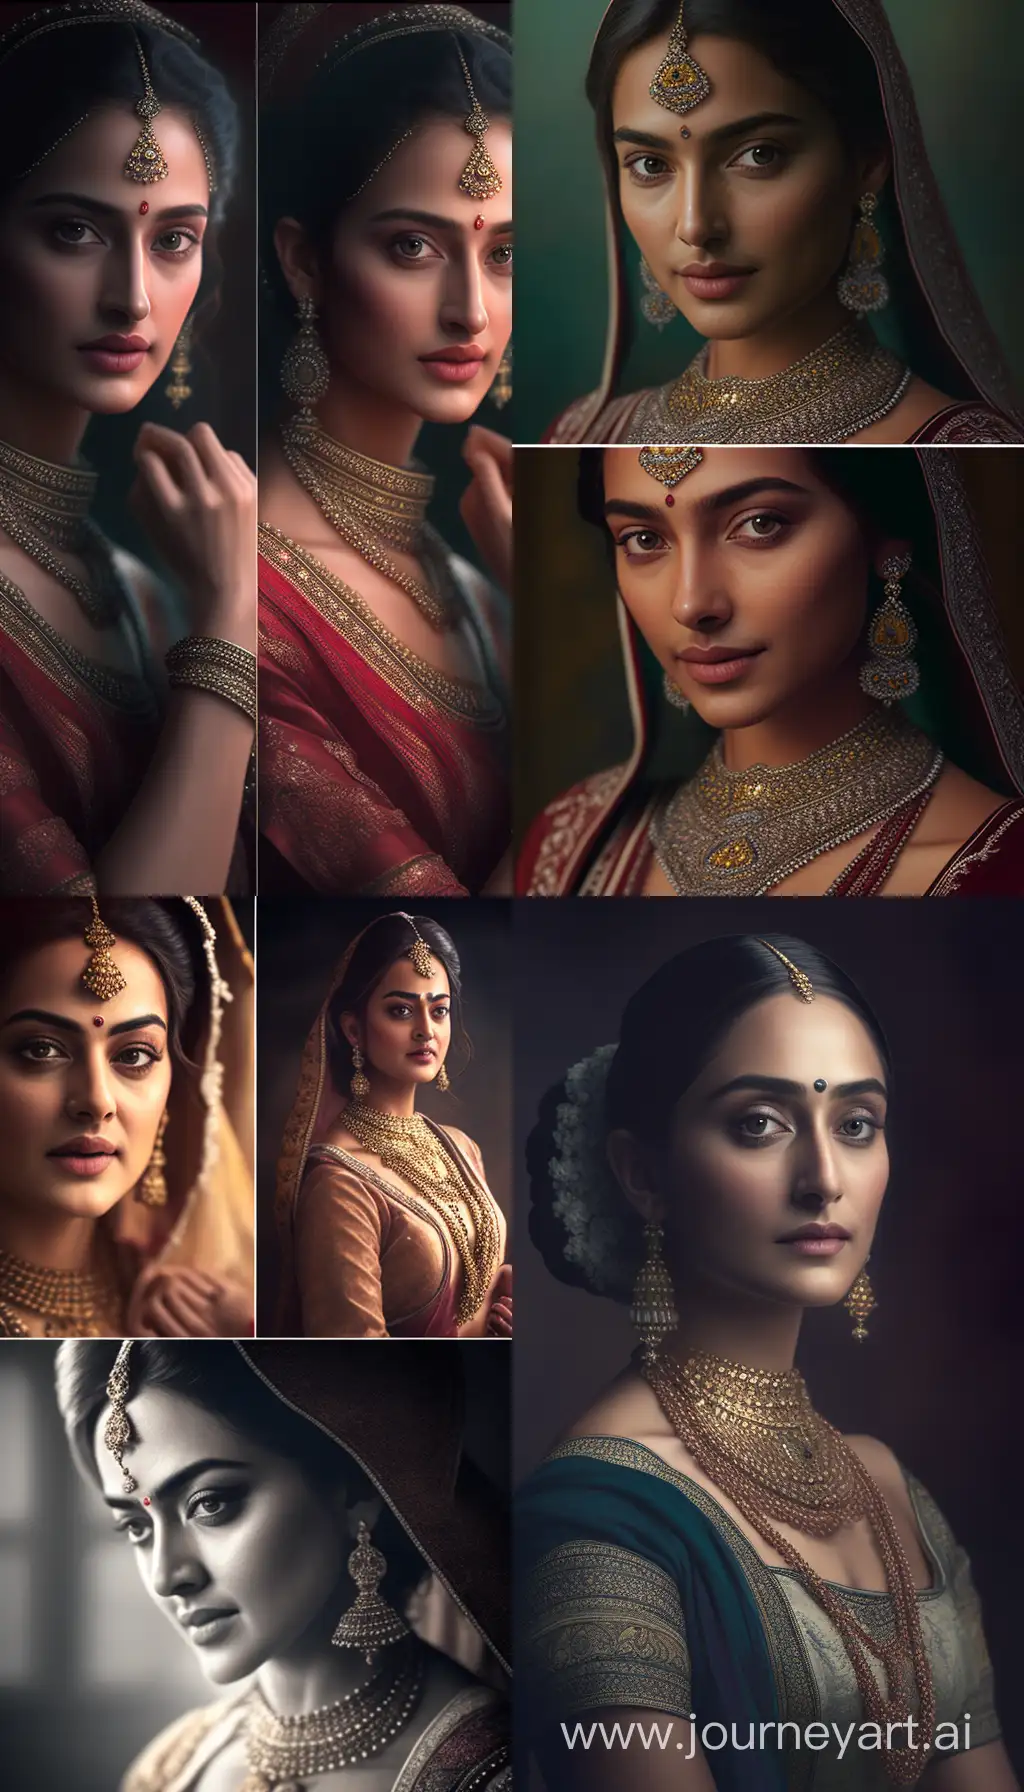 Elegant-Indian-Royal-Woman-CloseUp-Portrait-with-Intricate-Details